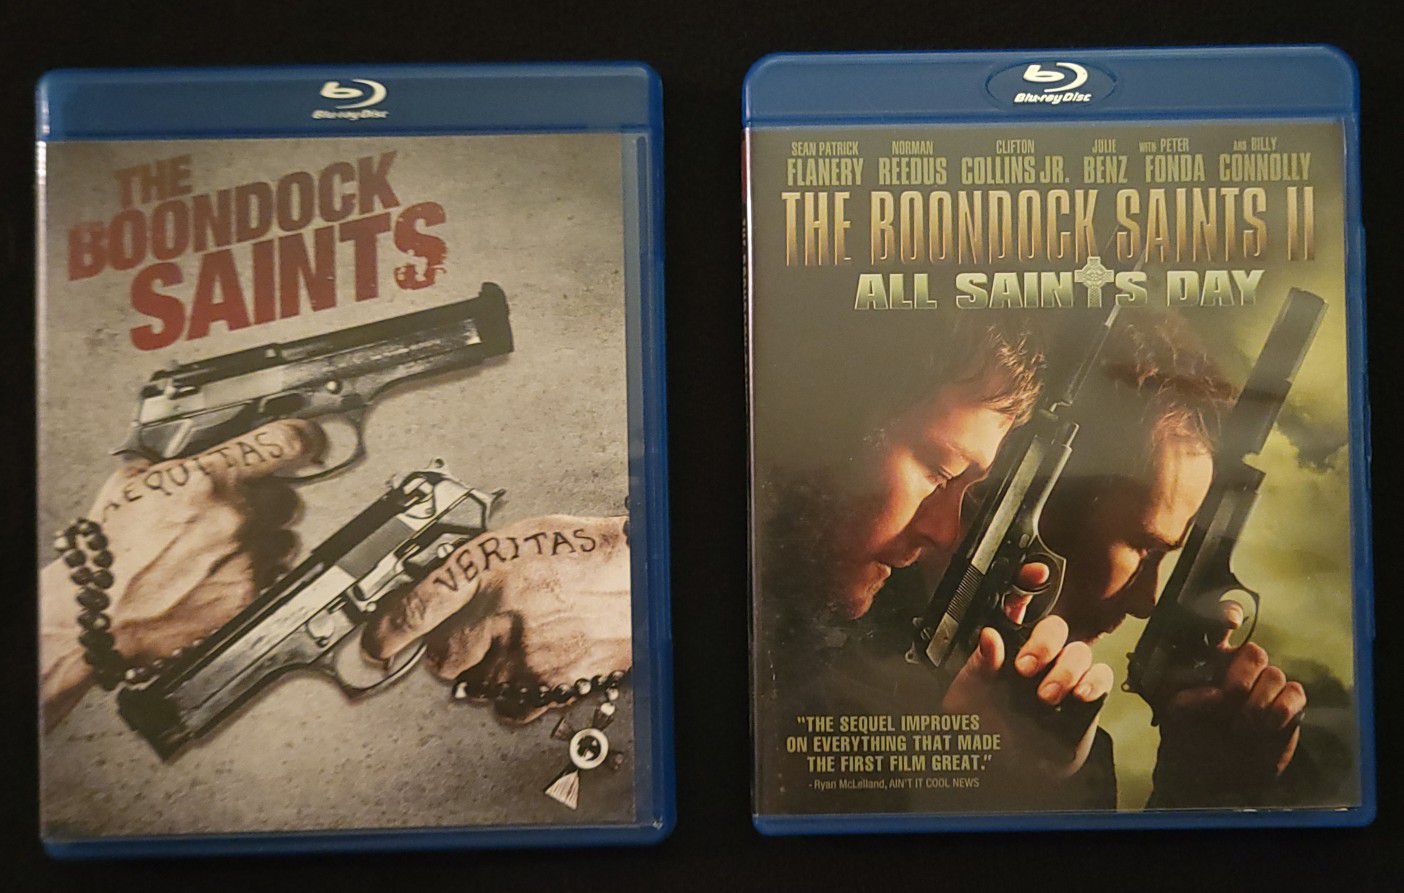 The Boondock Saints + The Boodock Saints- All Saints Day